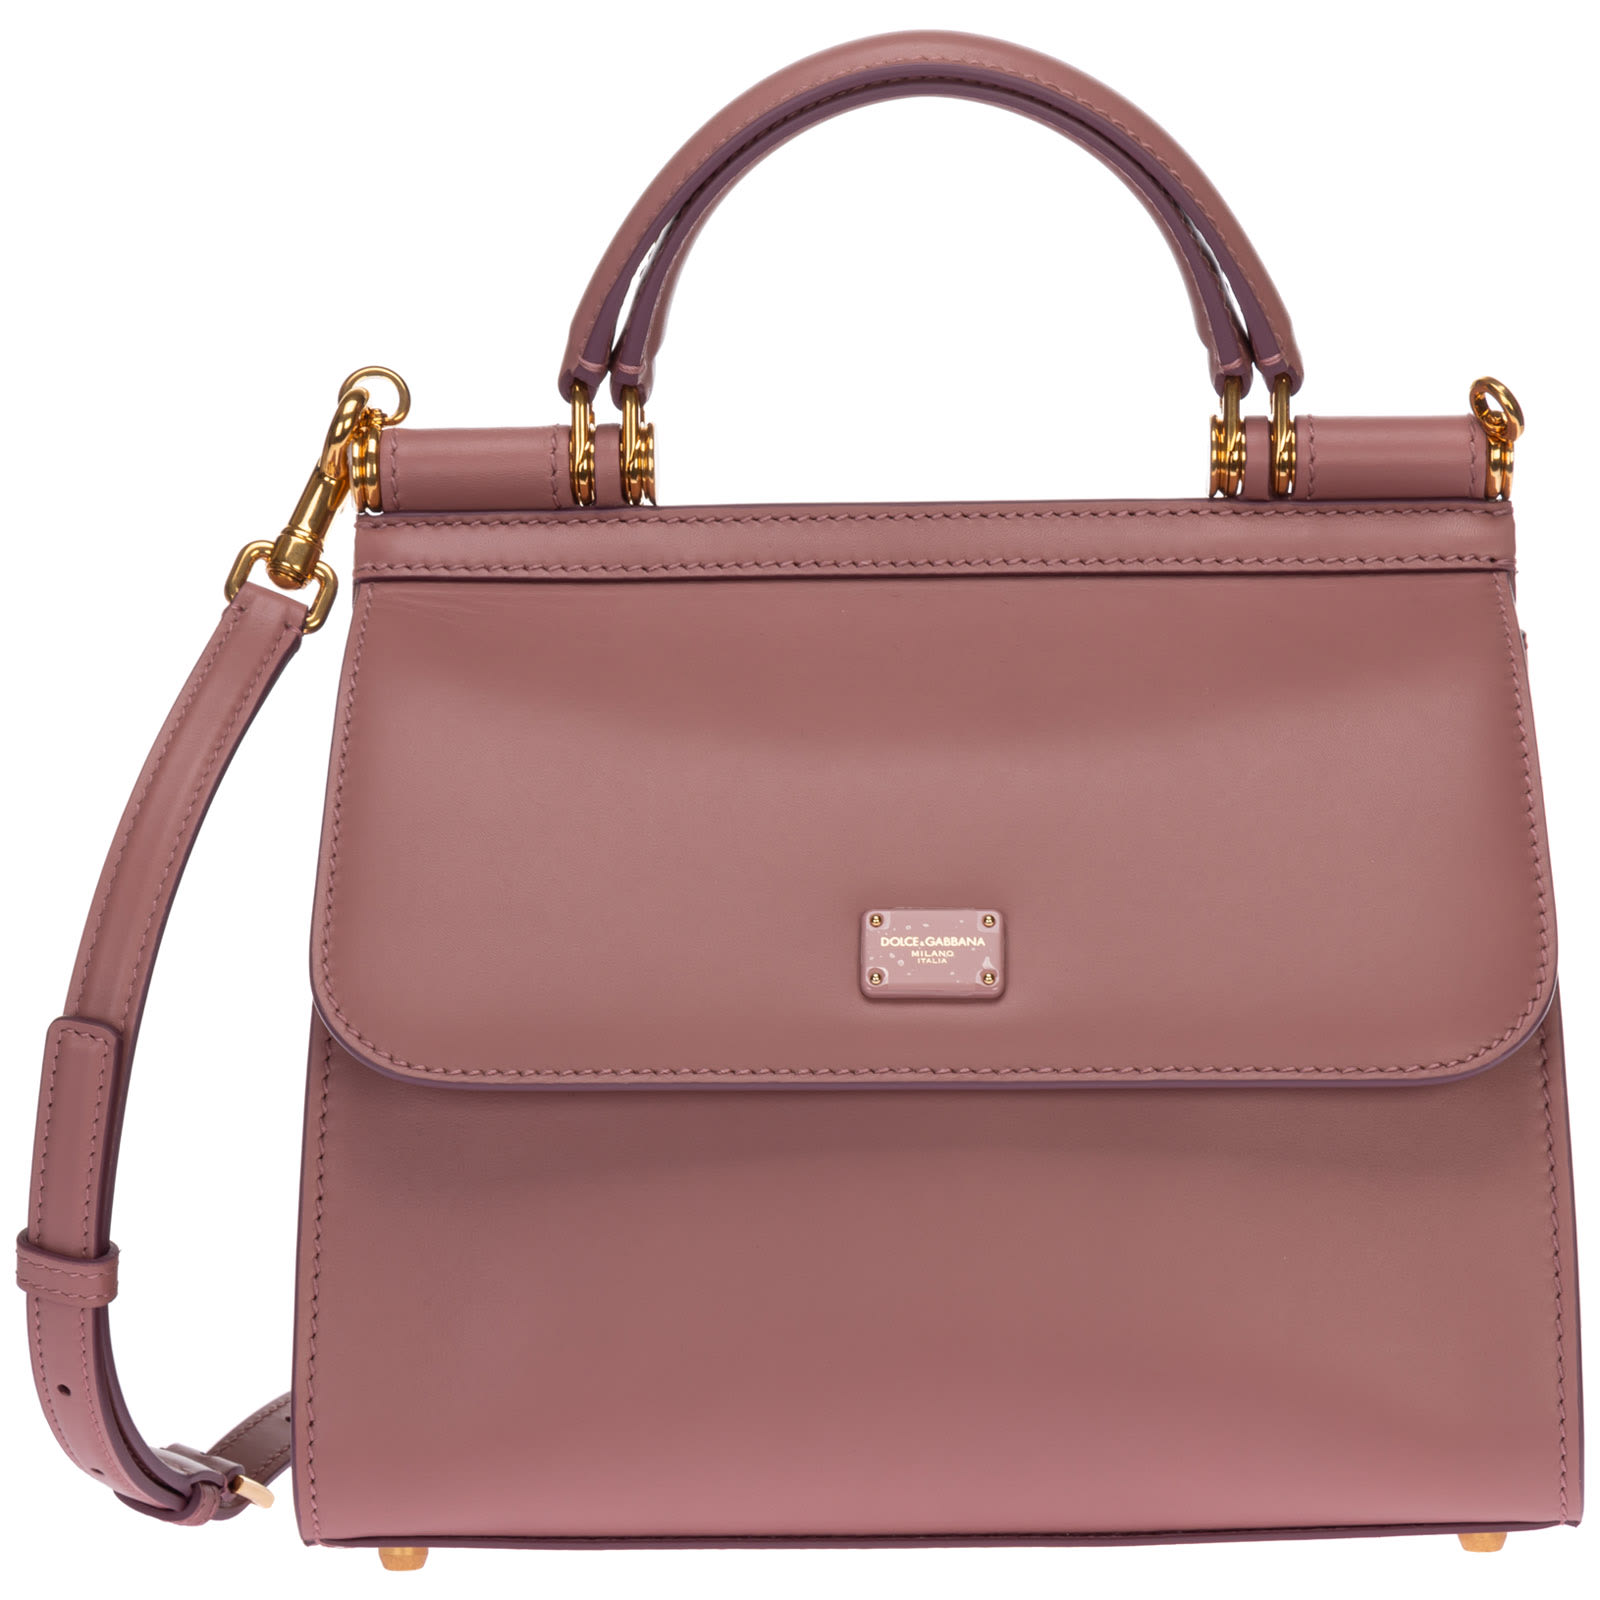 Dolce & Gabbana Sicily 58 Handbags In Rosa Polvere